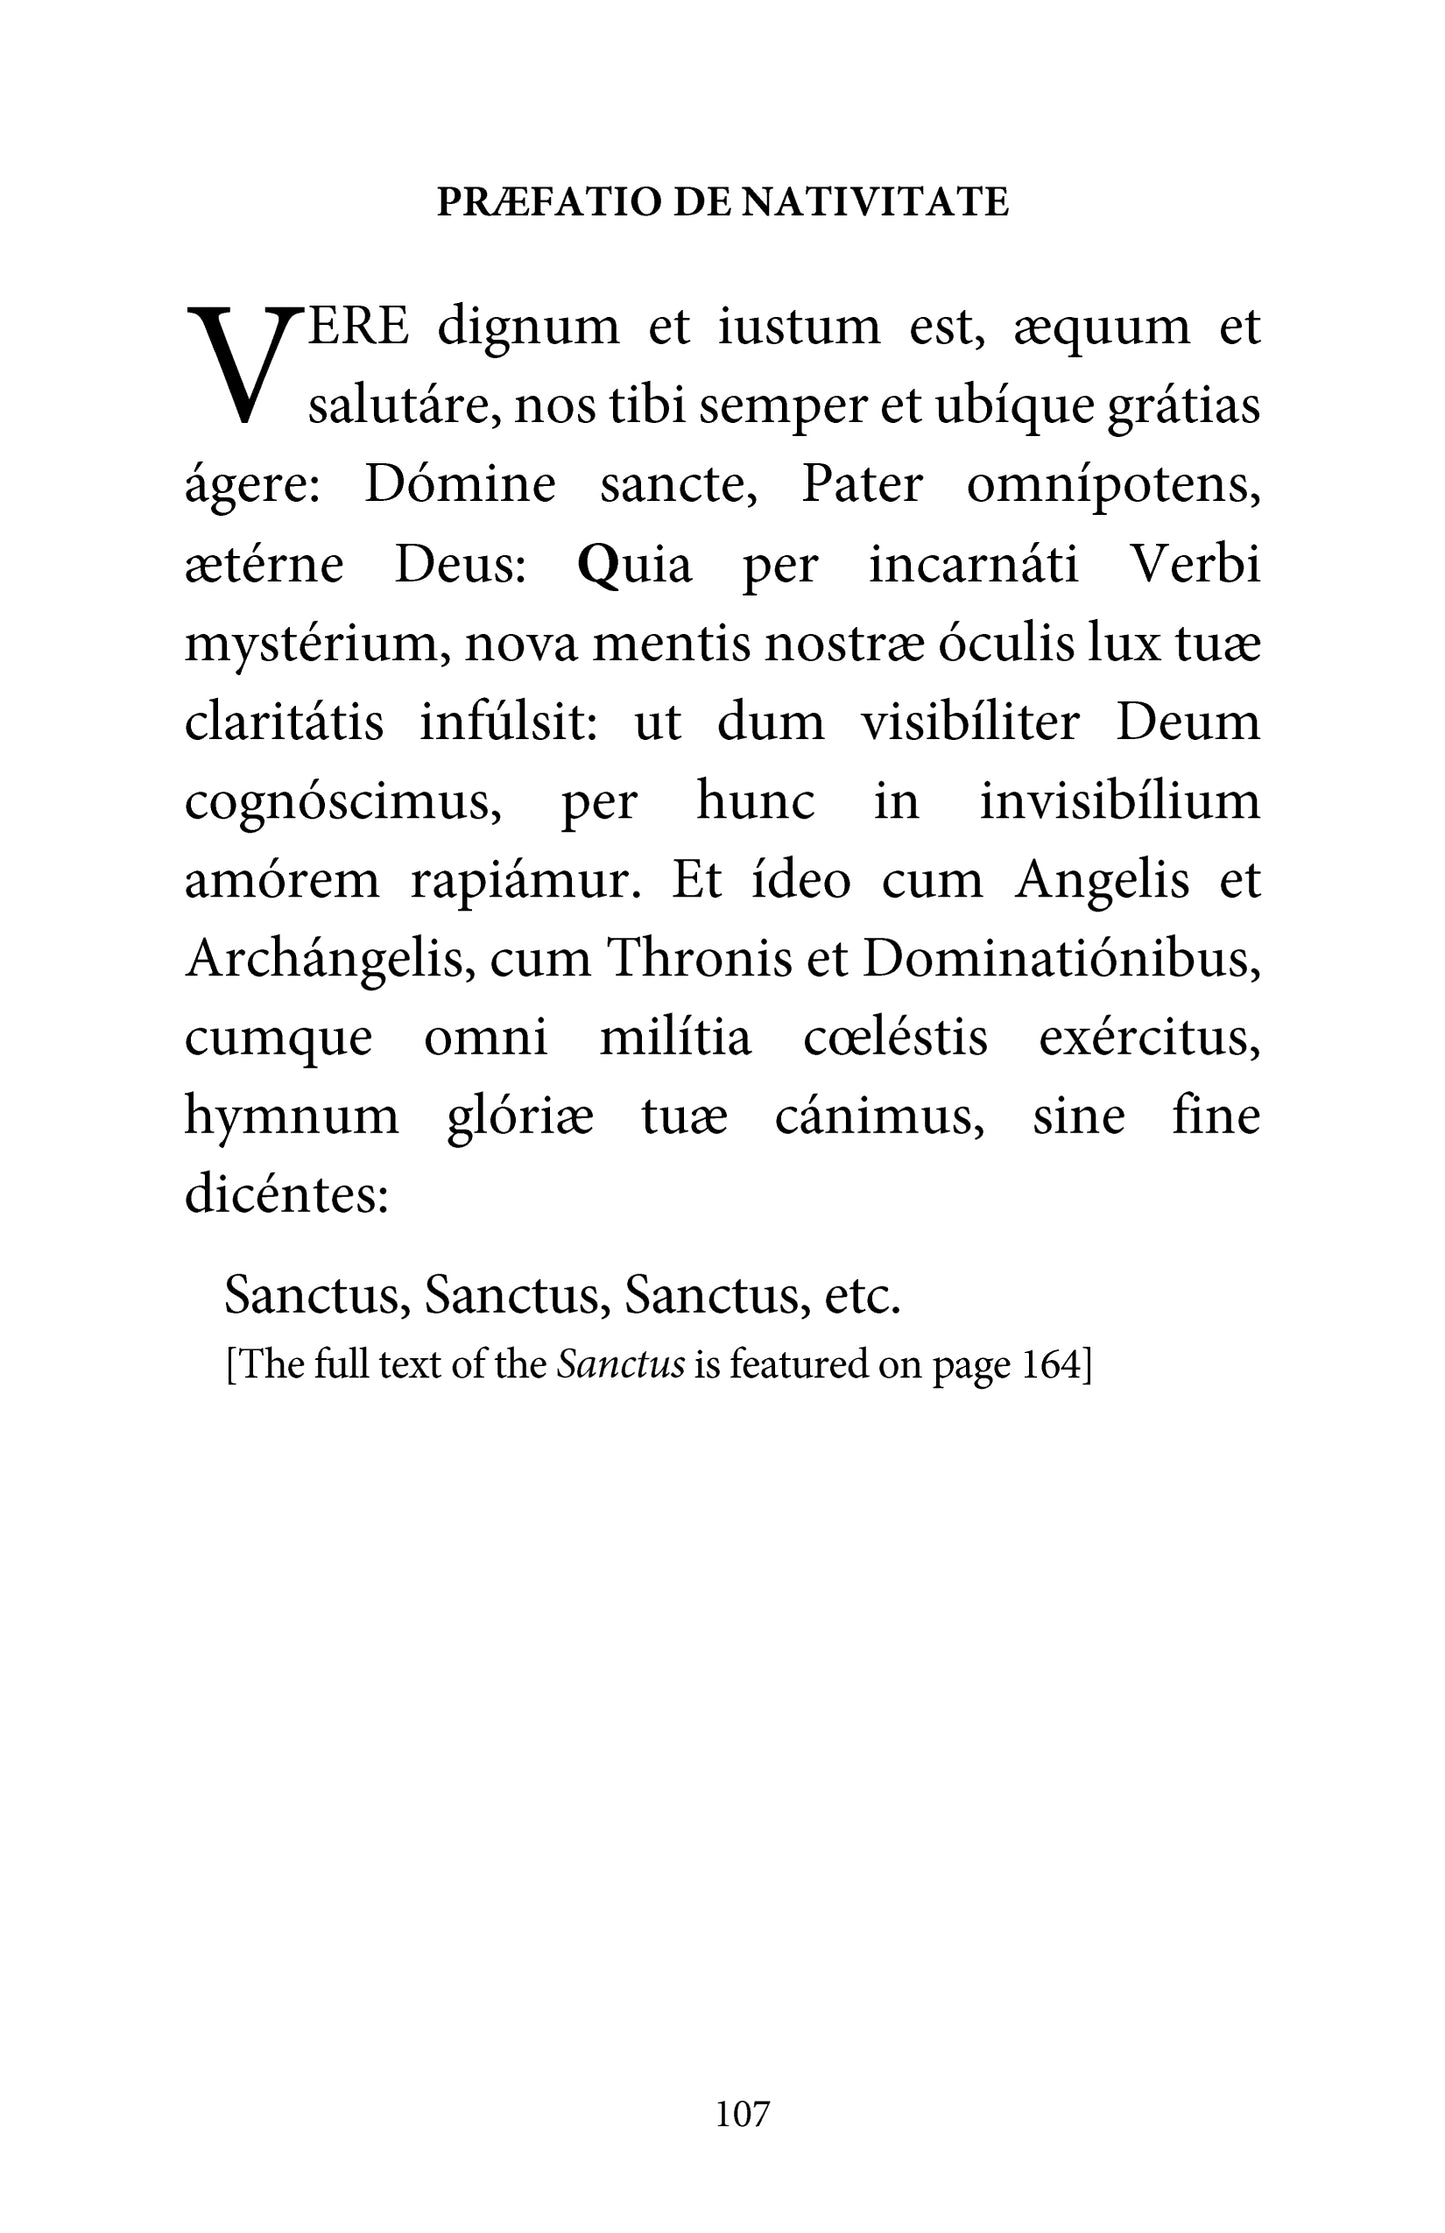 The Roman Canon: An Interlinear Translation - Romanitas Press